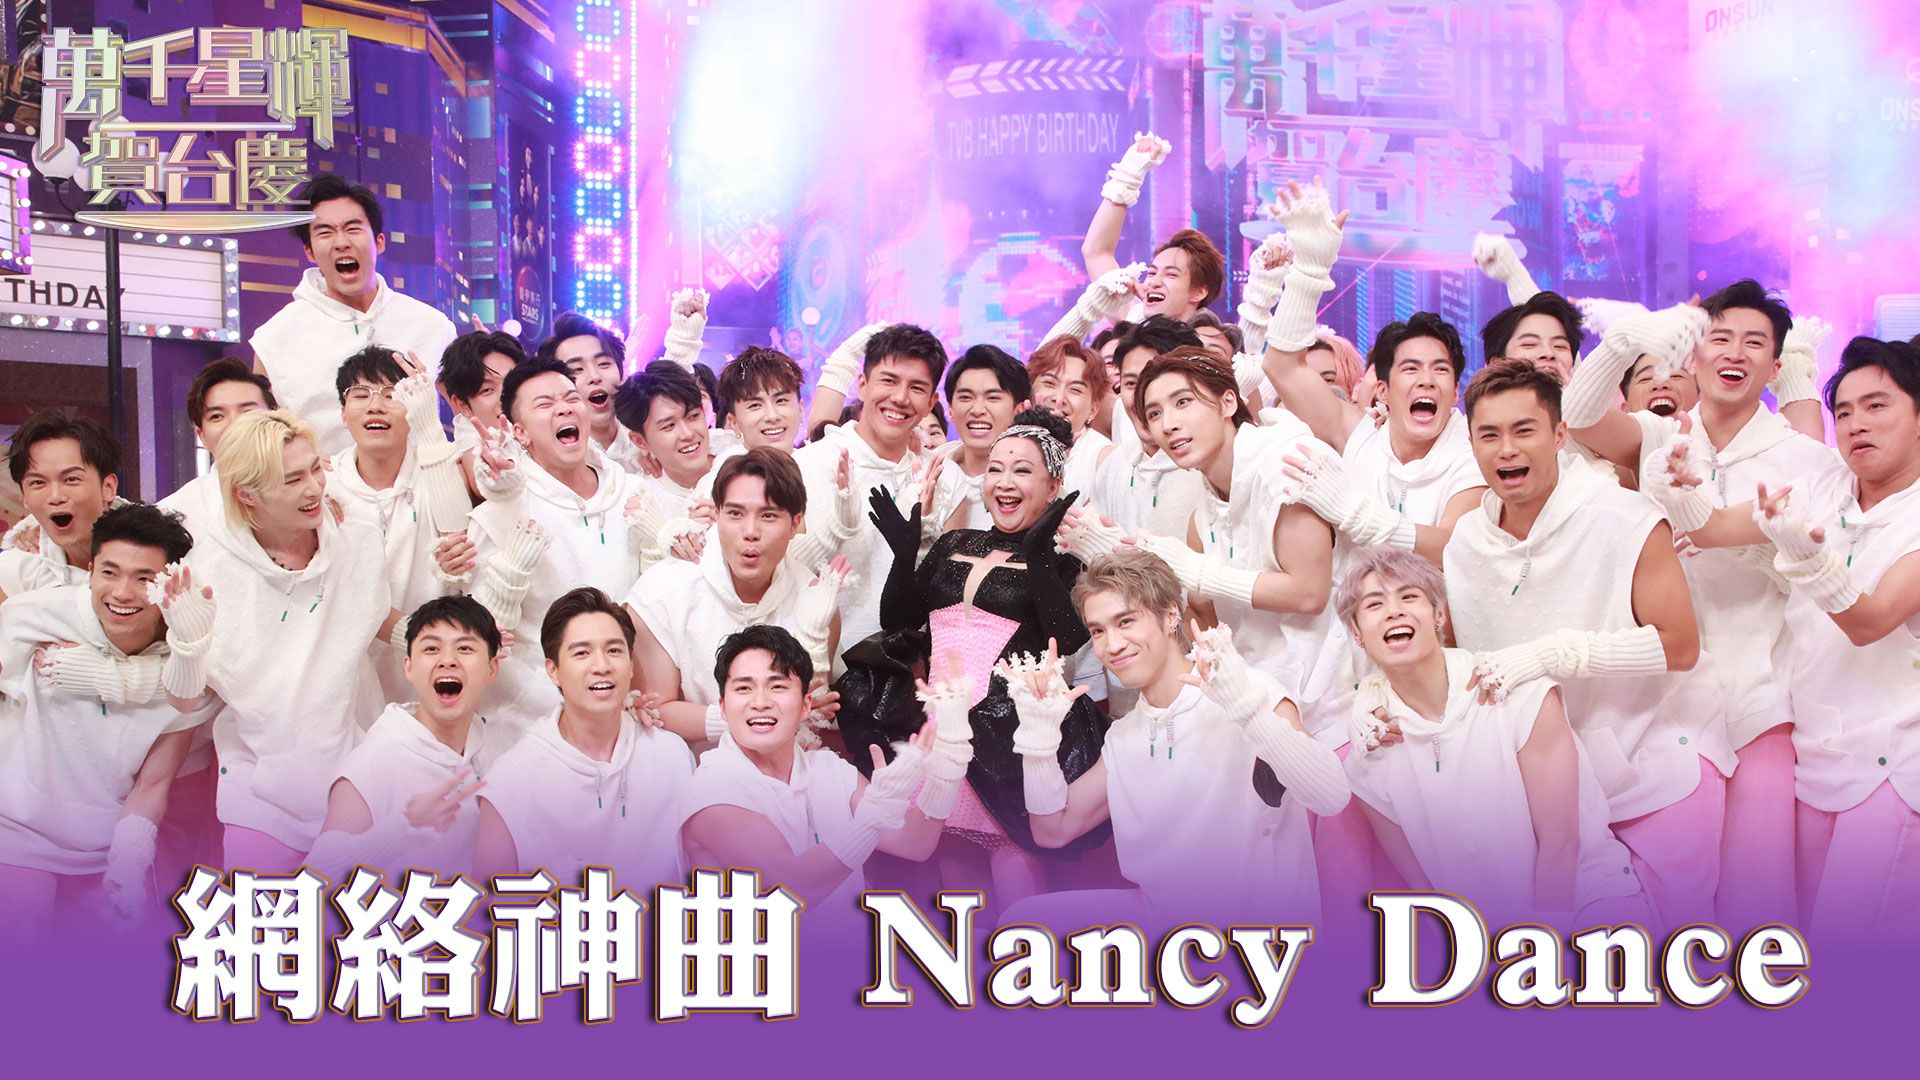 【56台慶精華】網絡神曲 Nancy Dance-TVB 56th Anniversary Gala Clip 08